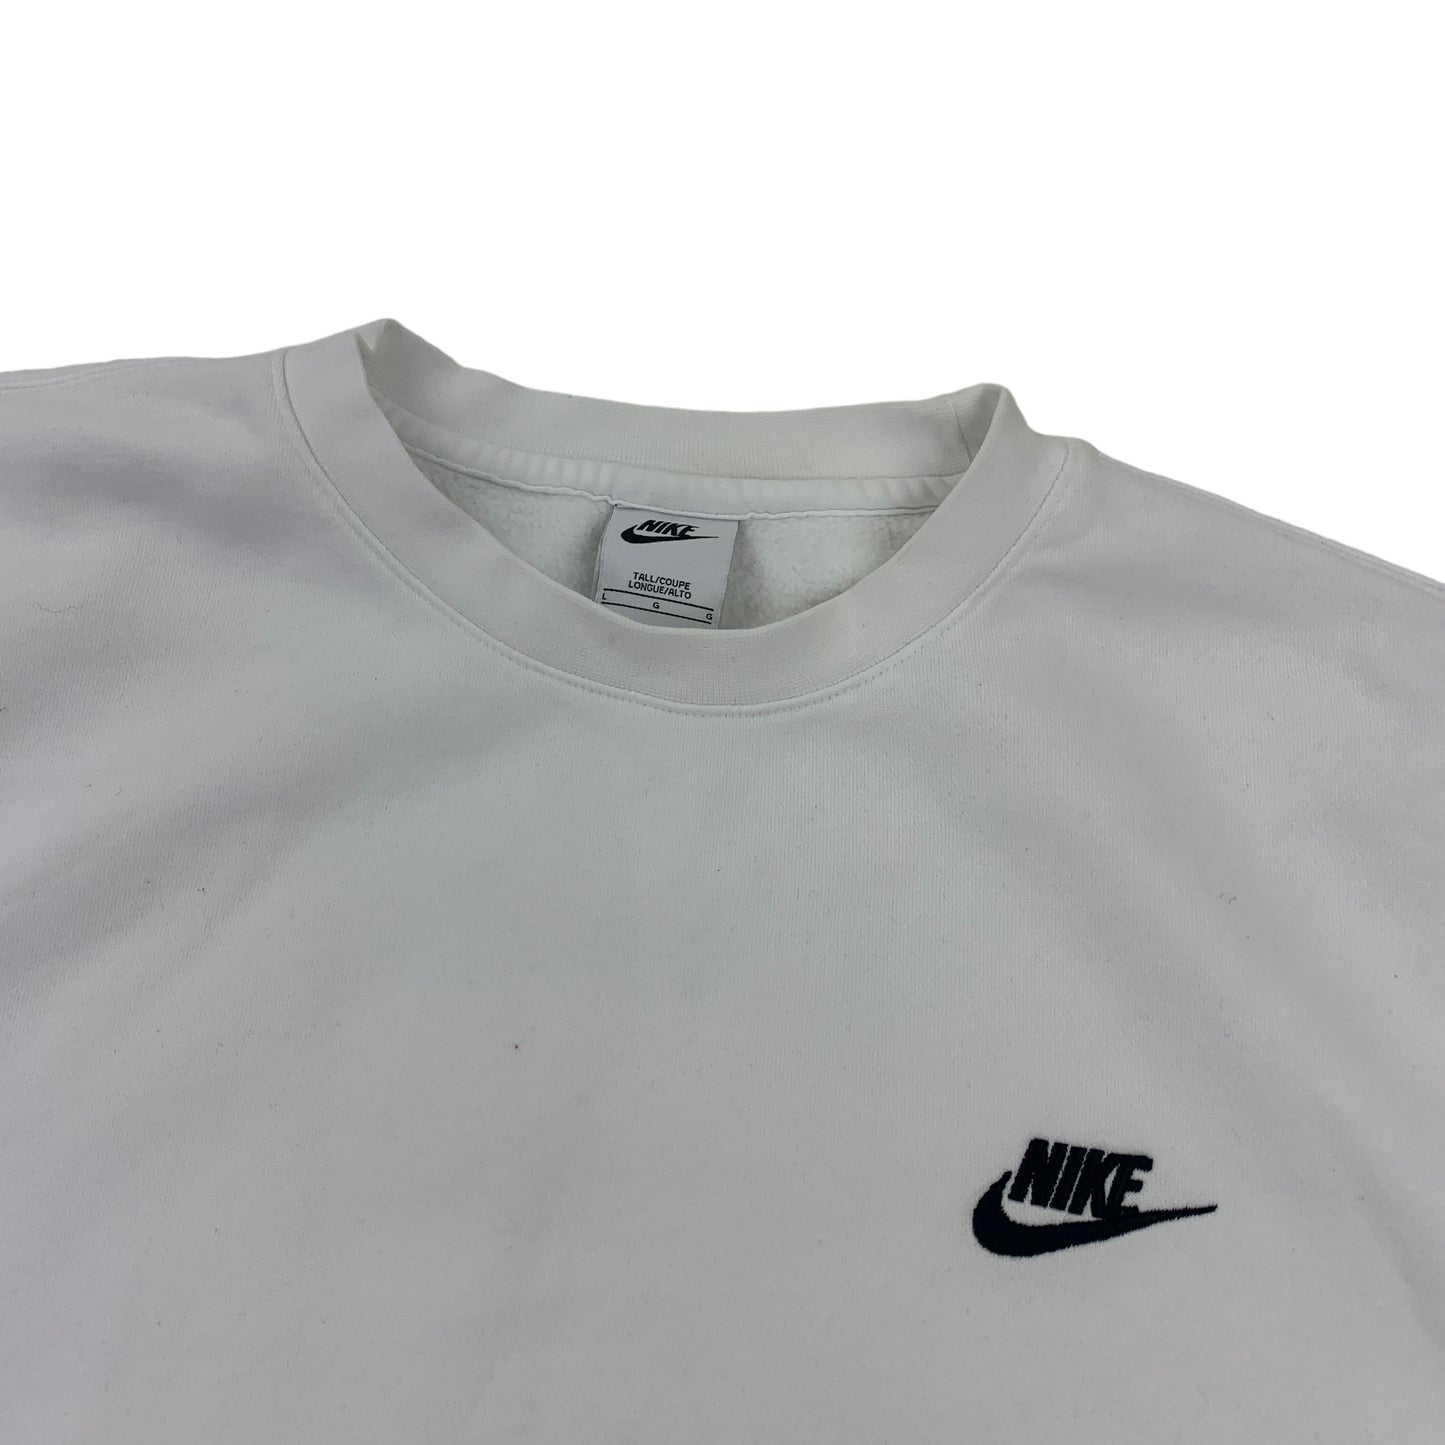 Nike Sweatshirt (white) Sweater - L